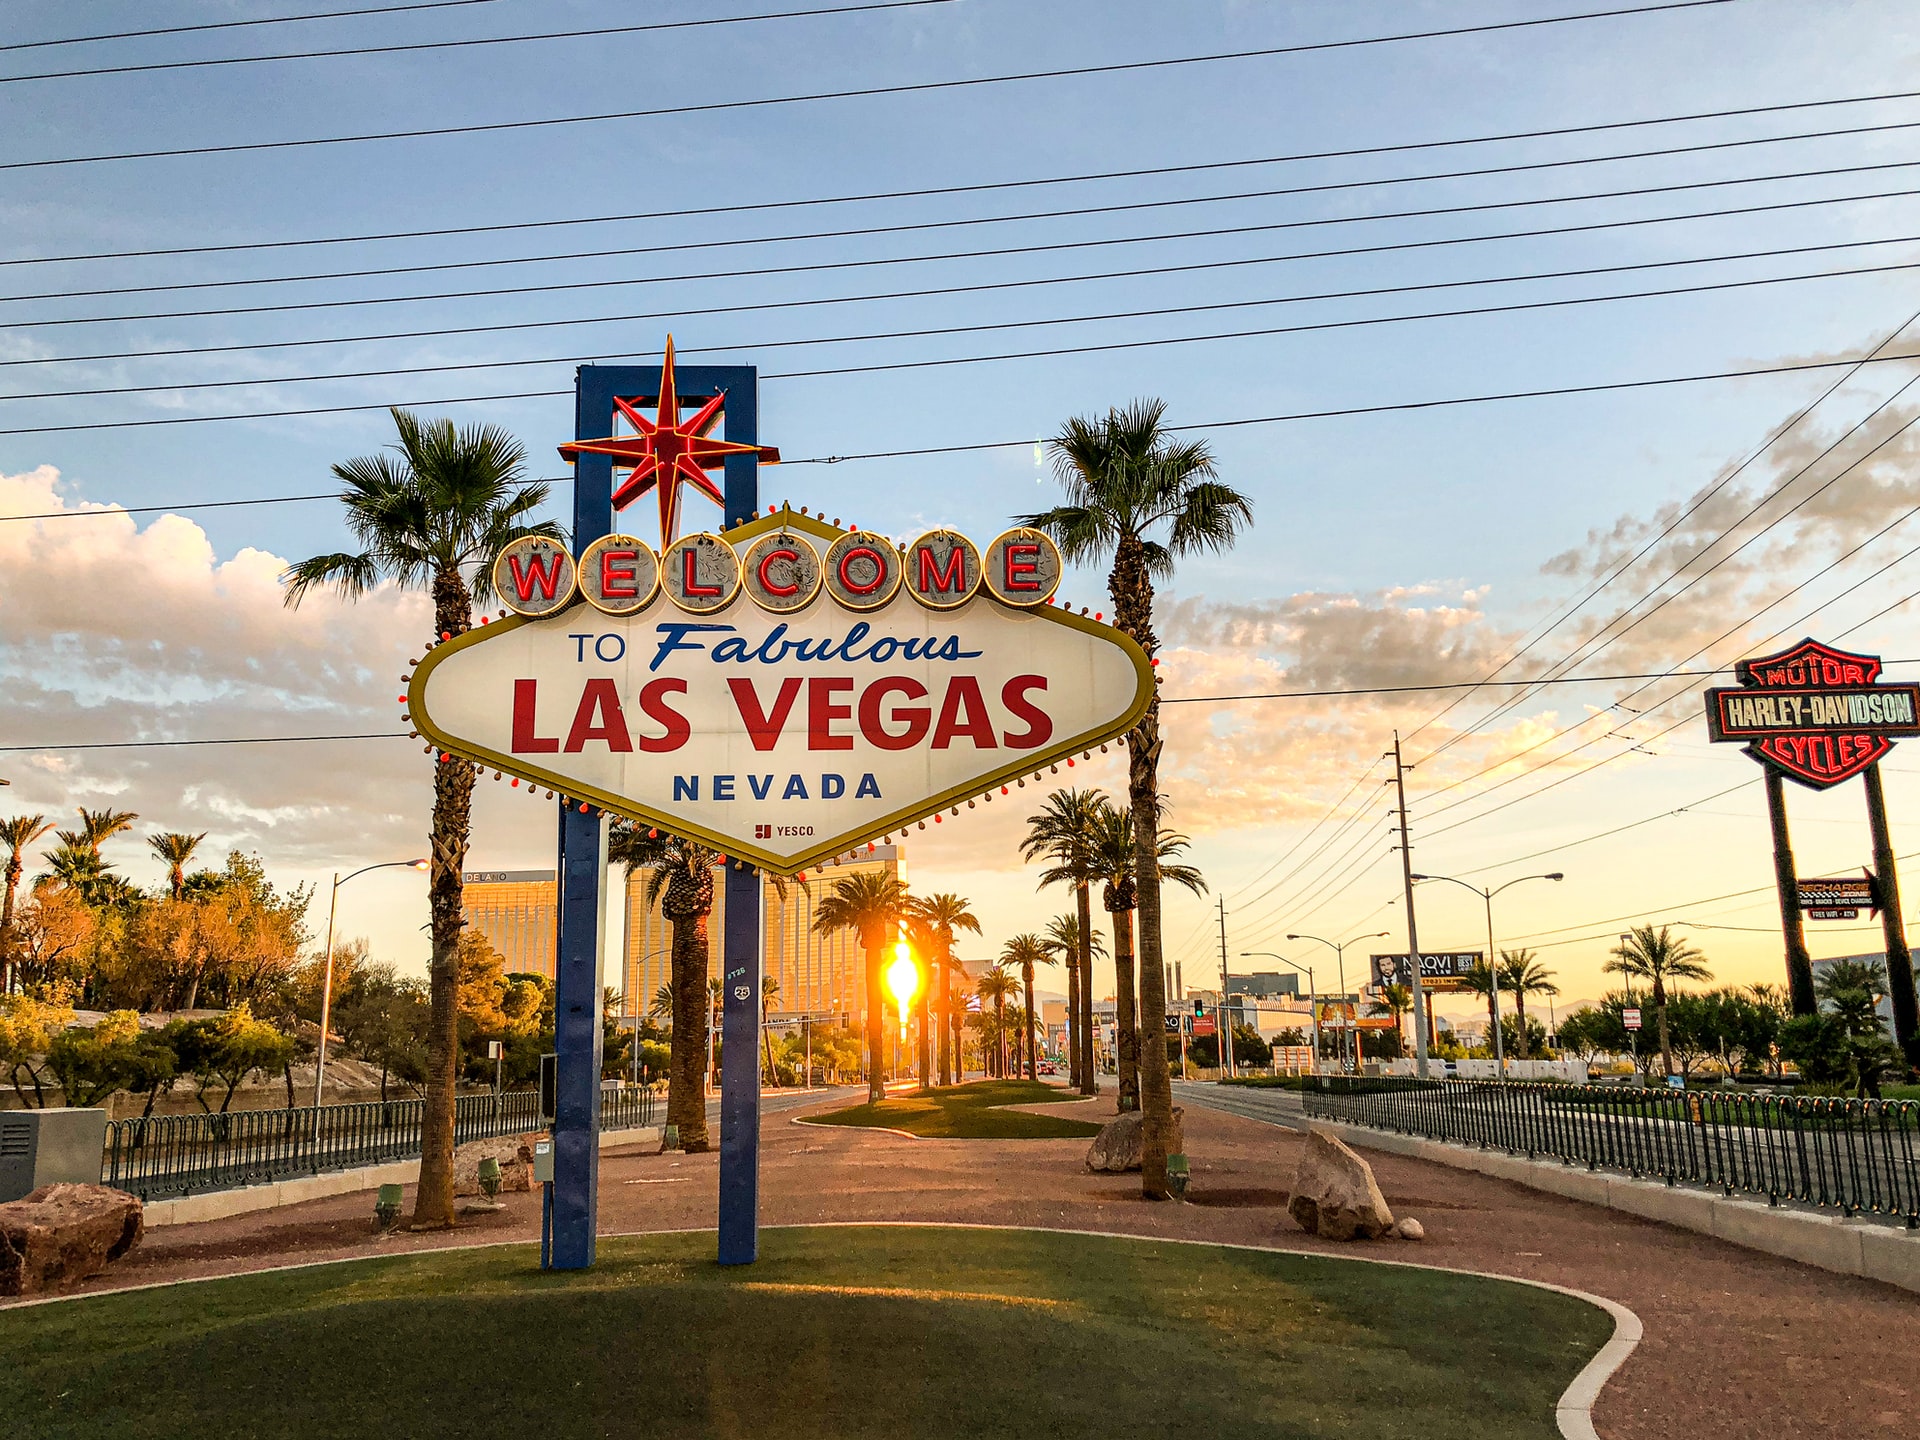 Las Vegas sign in Las Vegas